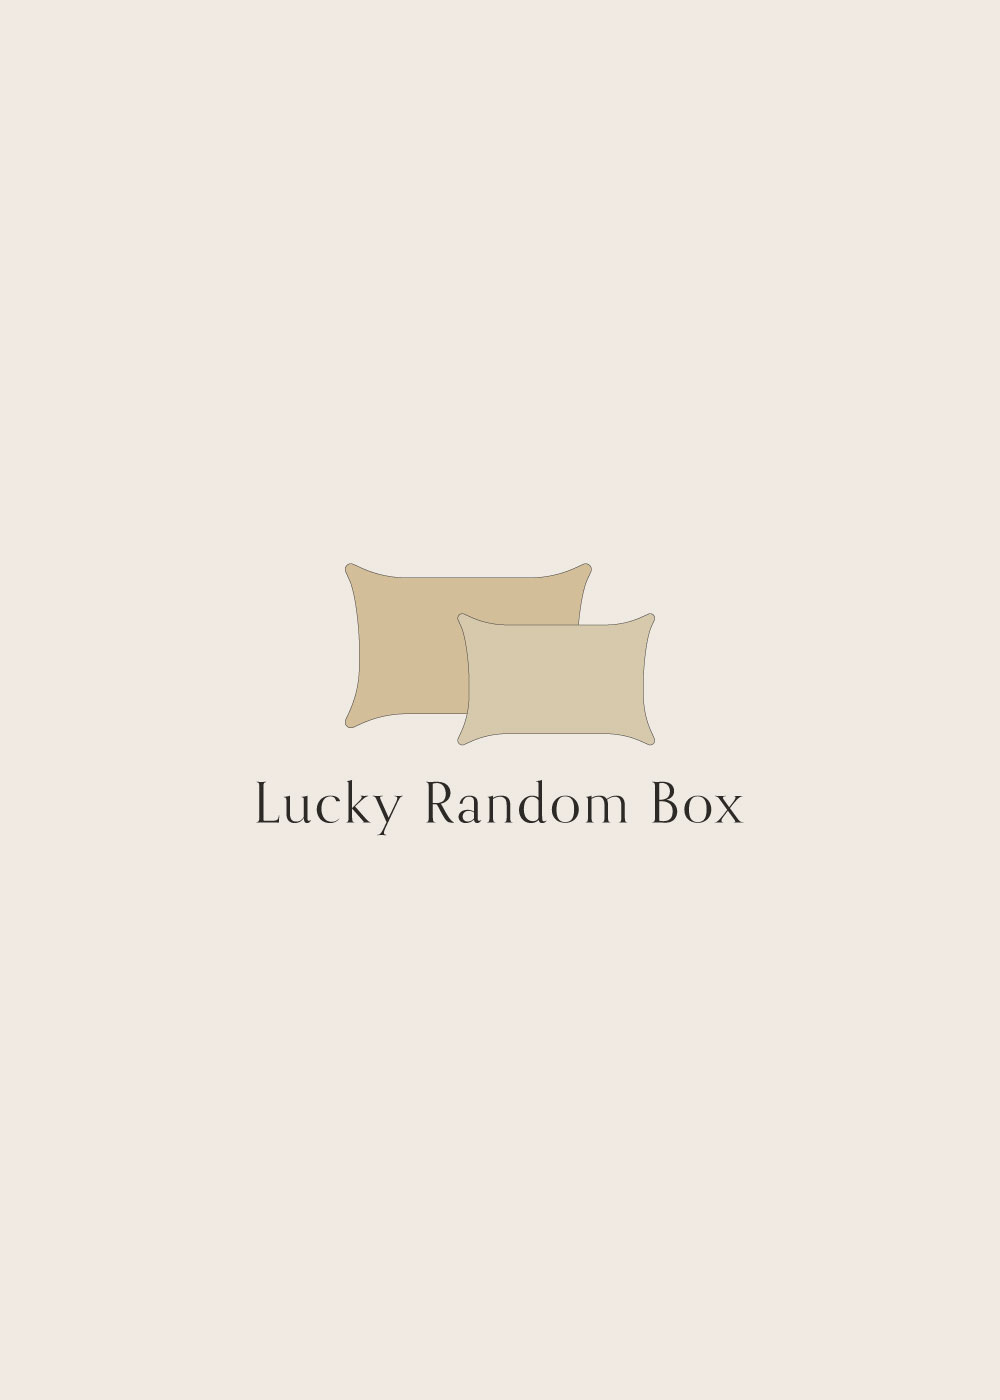 lucky random box event (베개커버 랜덤 이벤트)